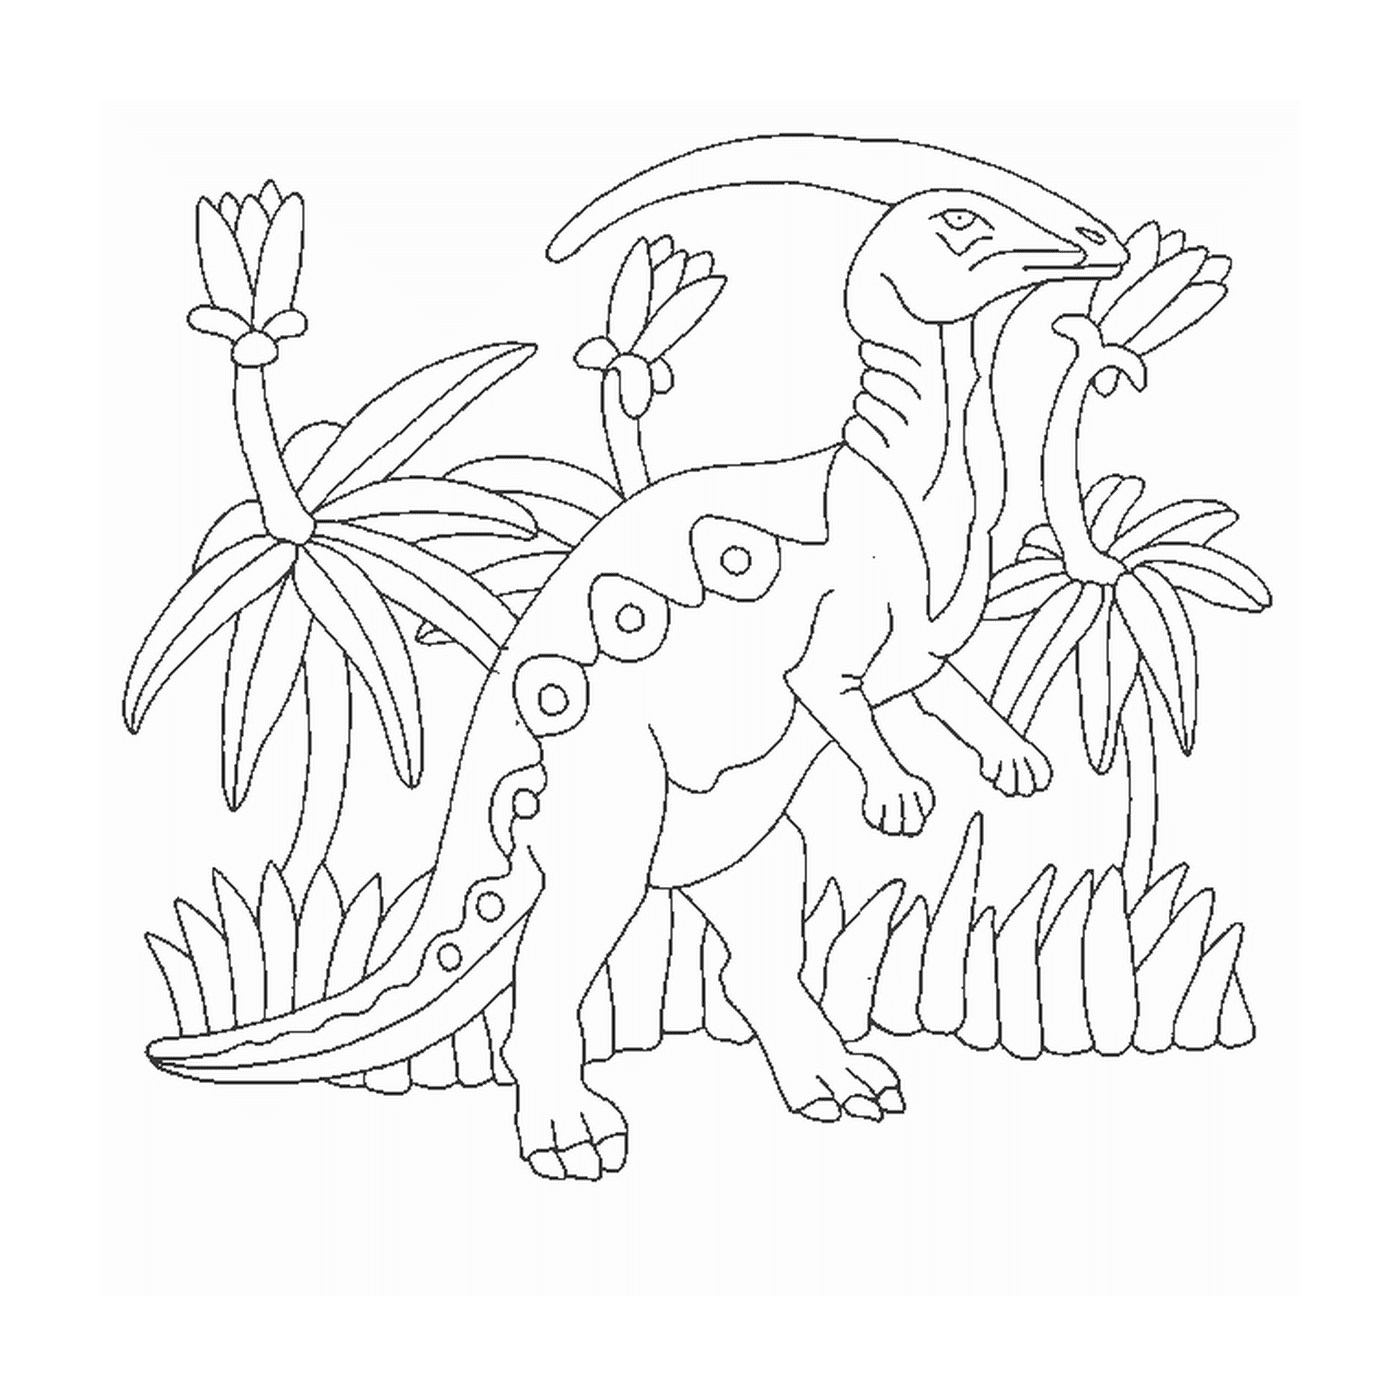   Dinosaure évoluant dans la jungle luxuriante 